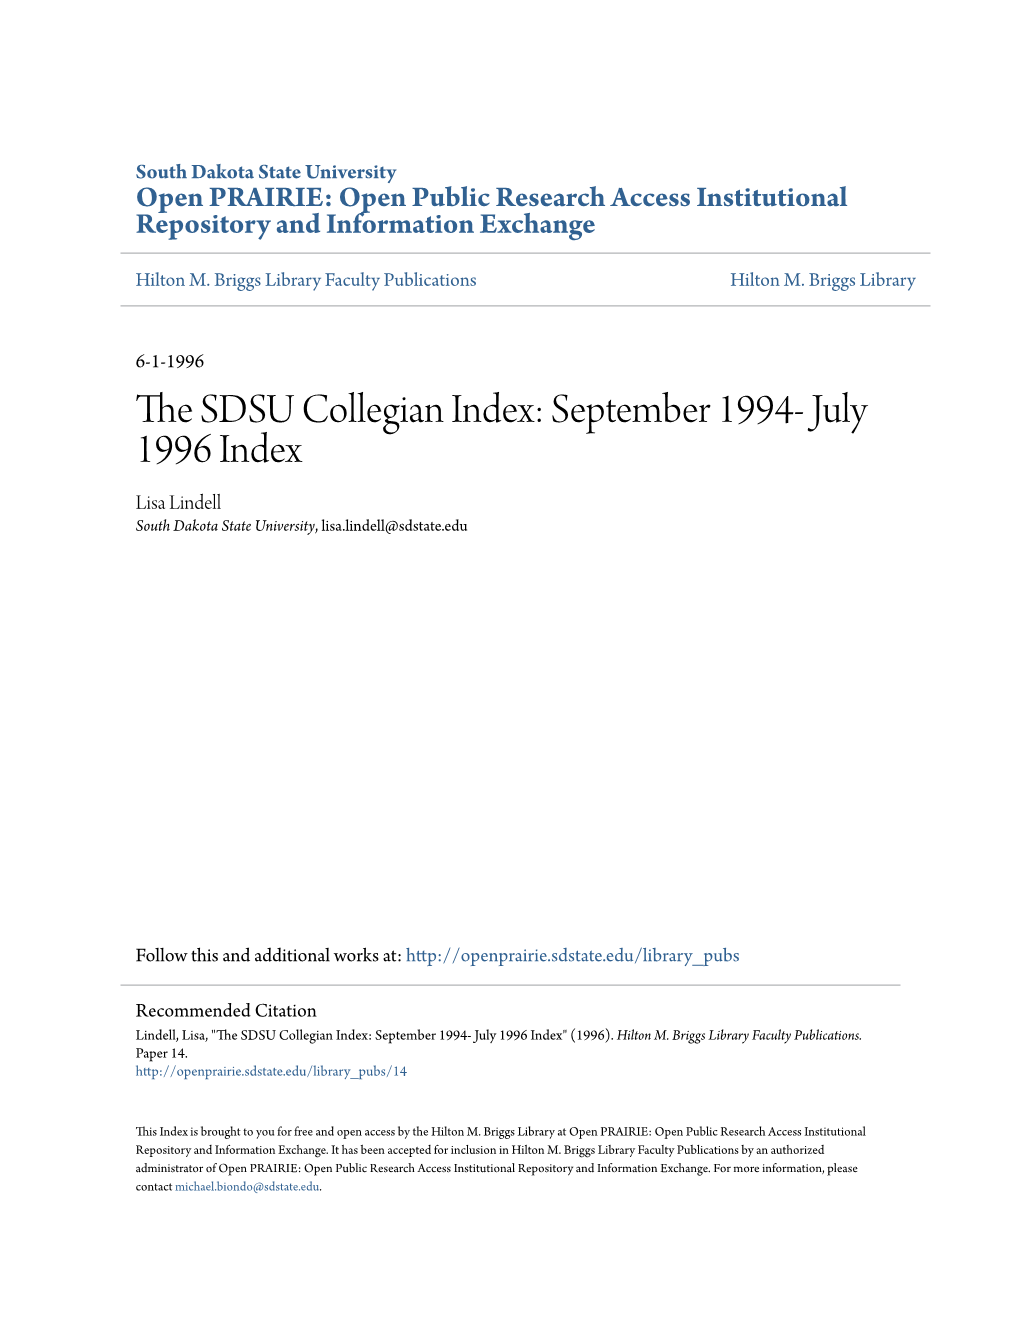 The SDSU Collegian Index: September 1994